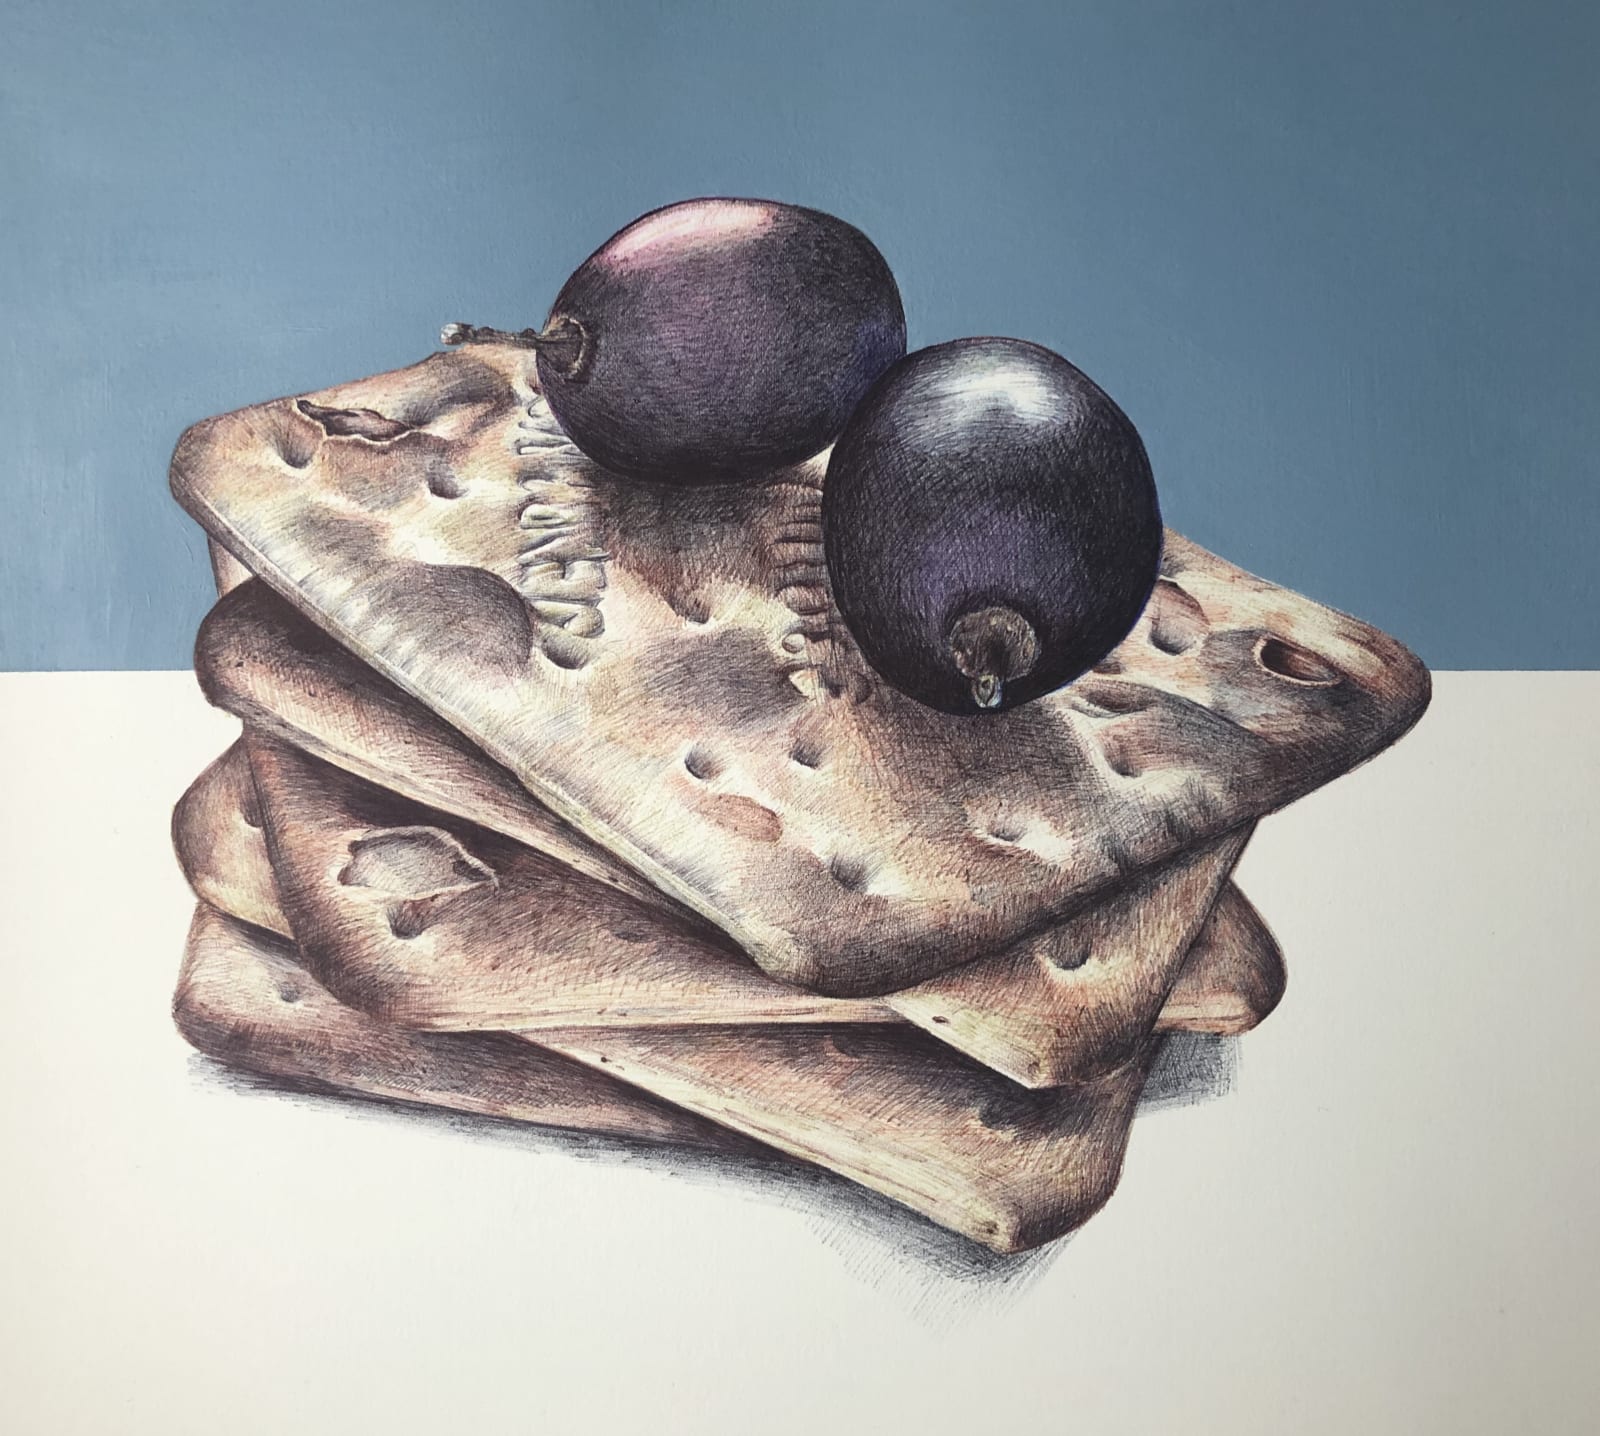 Nicola McBride, Crackers and Grapes